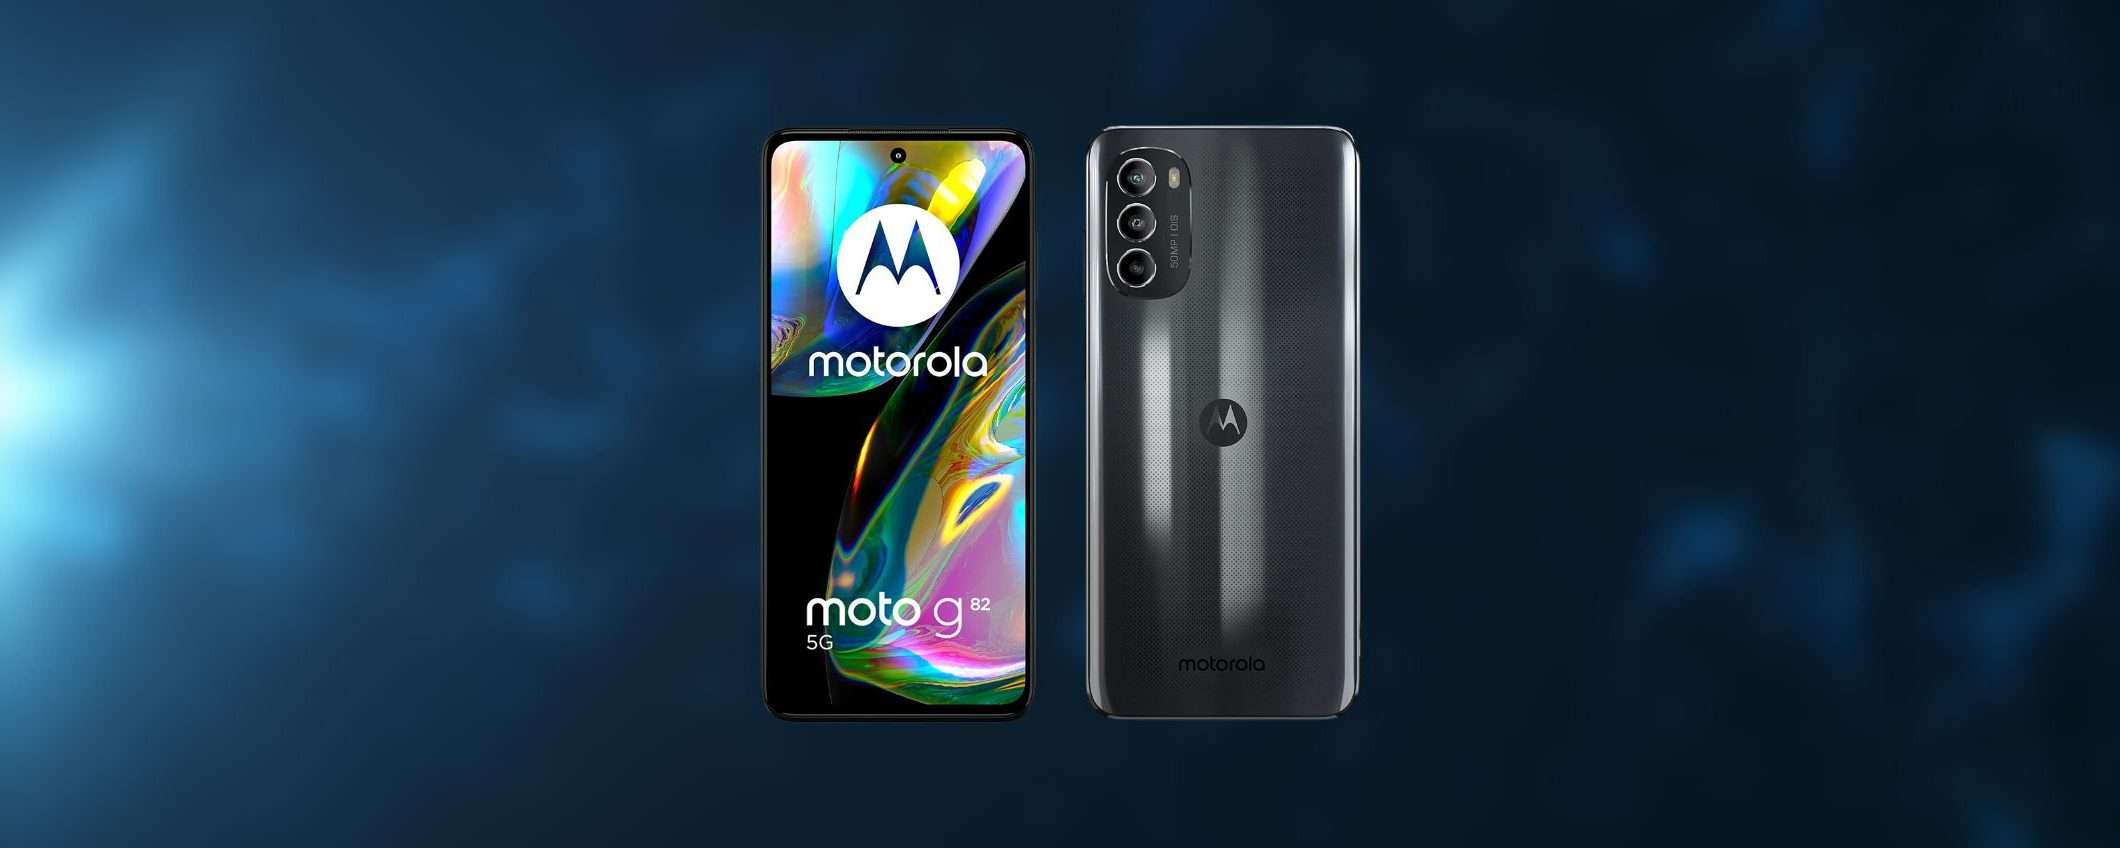 Motorola Moto g82: display OLED 120Hz e fotocamera 50MP in offerta (-50€)